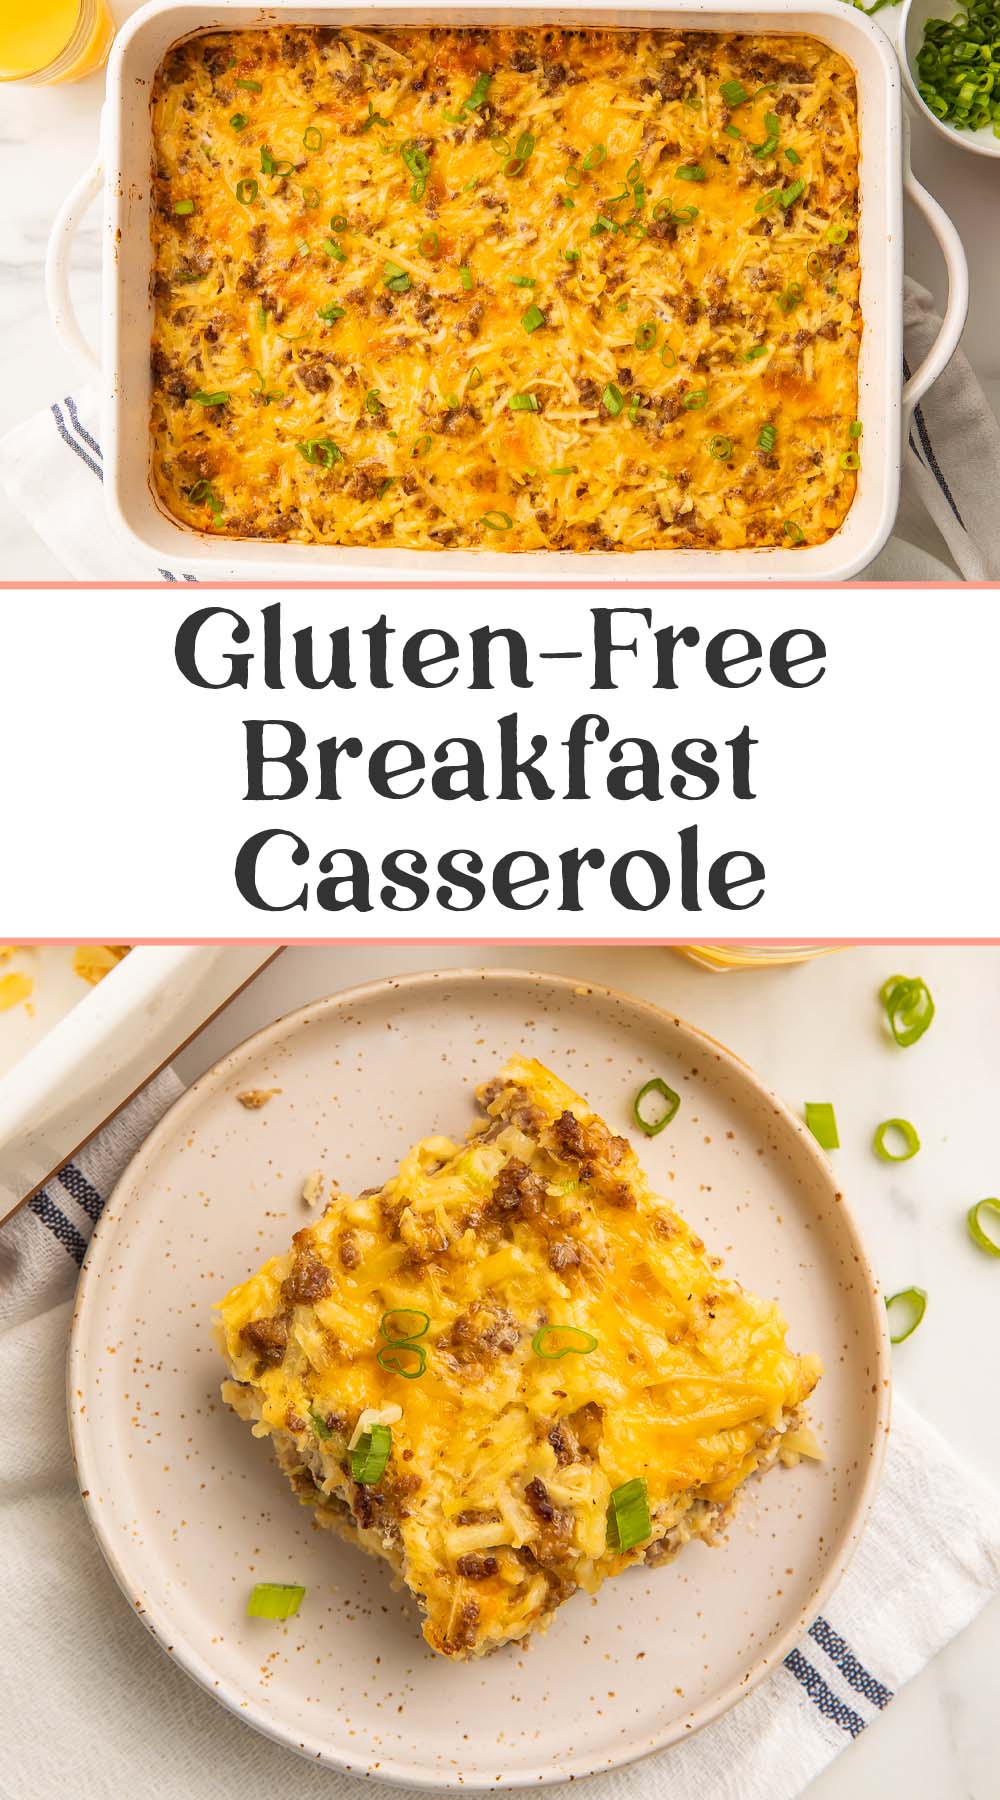 Pin graphic for gluten-free breakfast casserole.